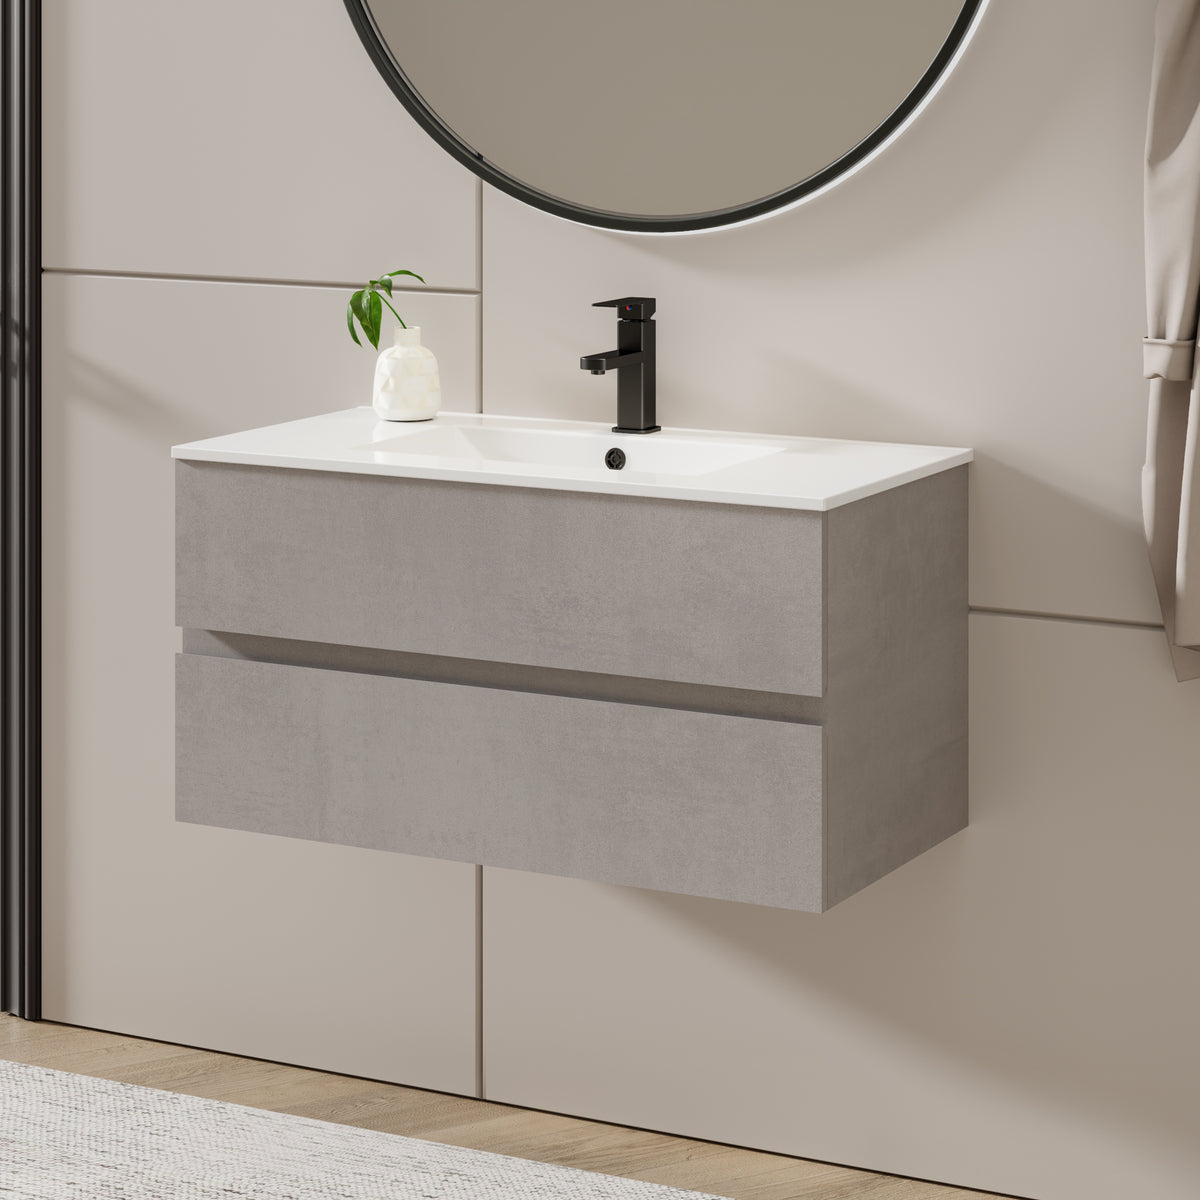 36" Wall Mounted Bathroom Vanity Combo with Single Undermount Sink — Cement Grey